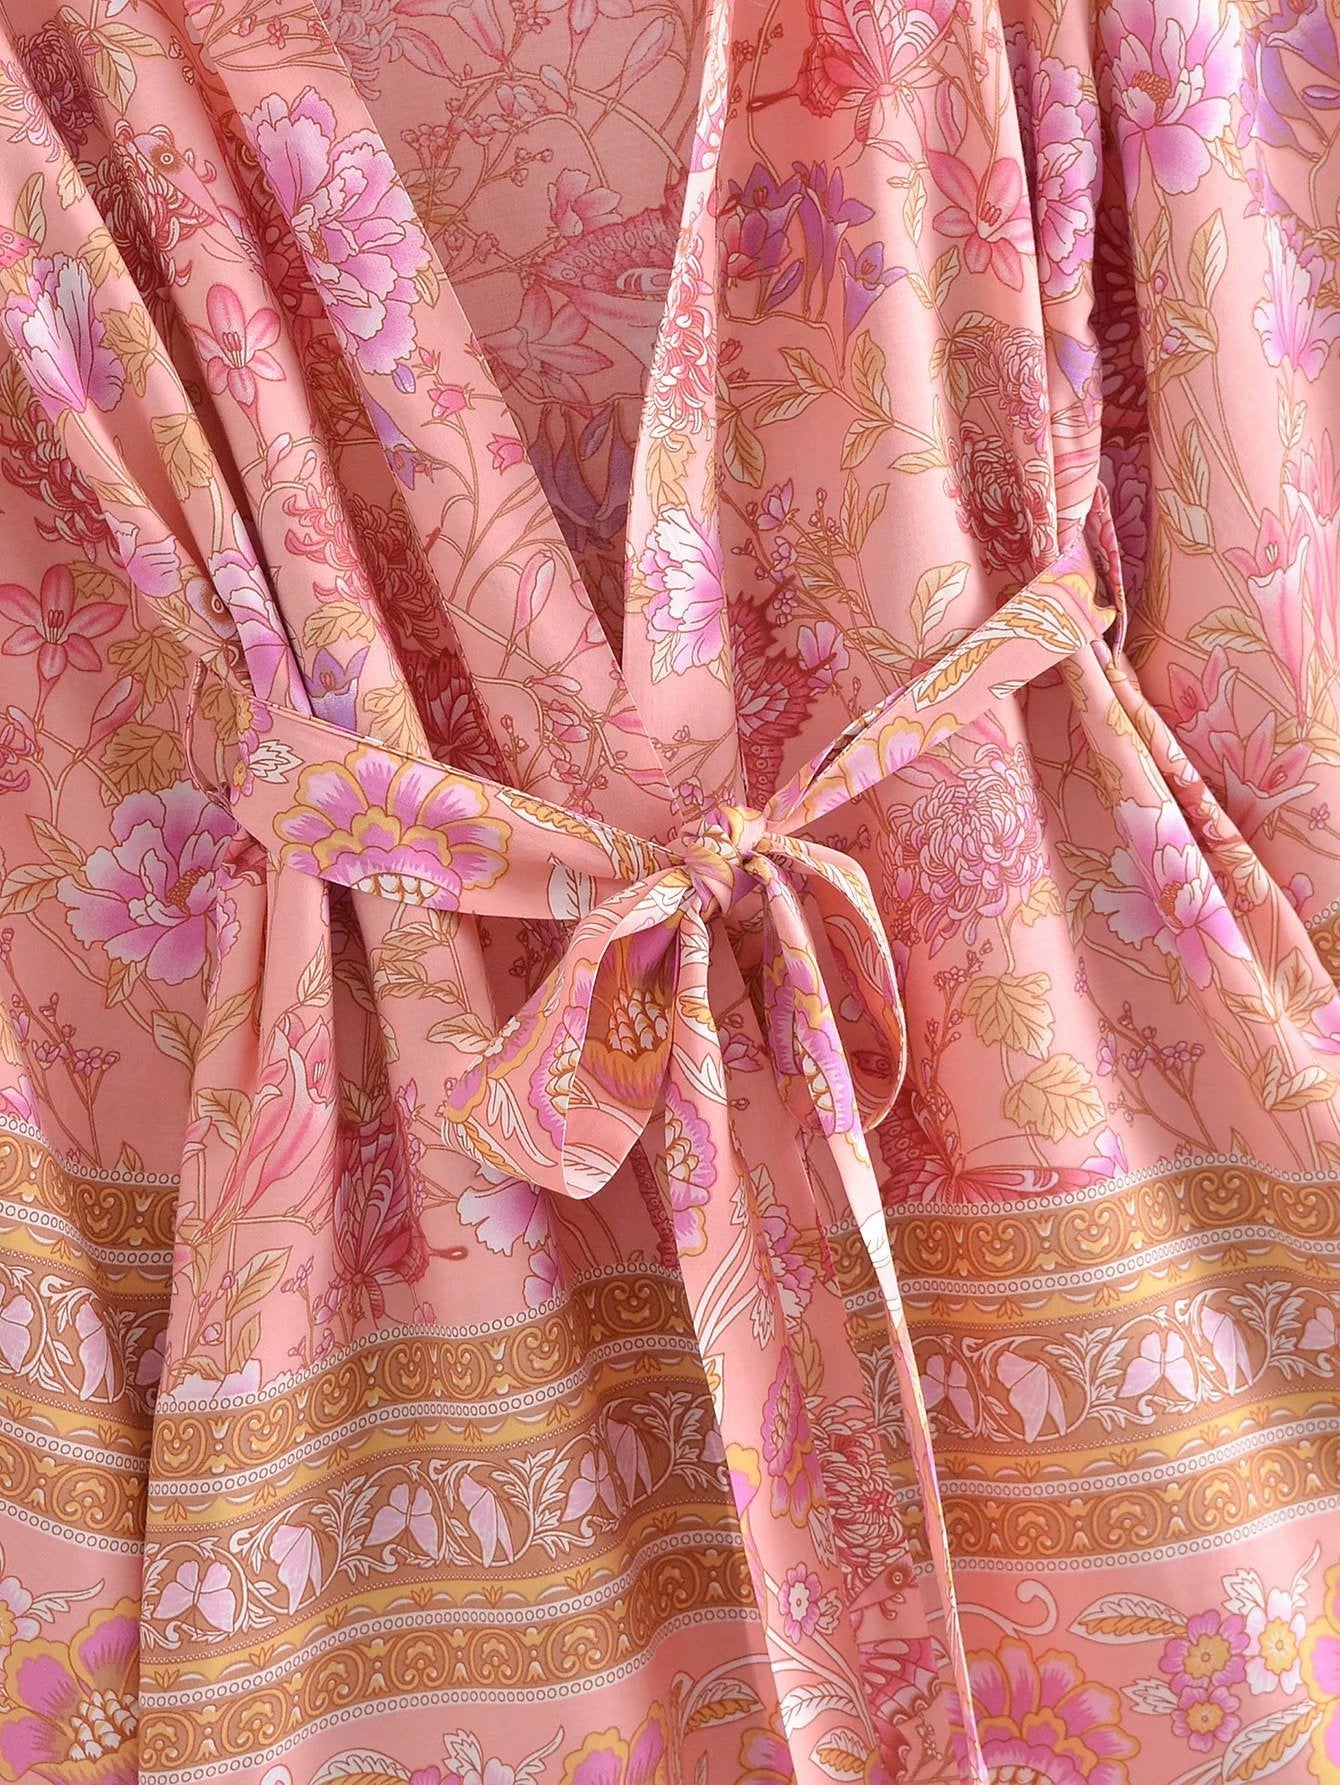 Marigold's Boho Cover Up Short Kimono